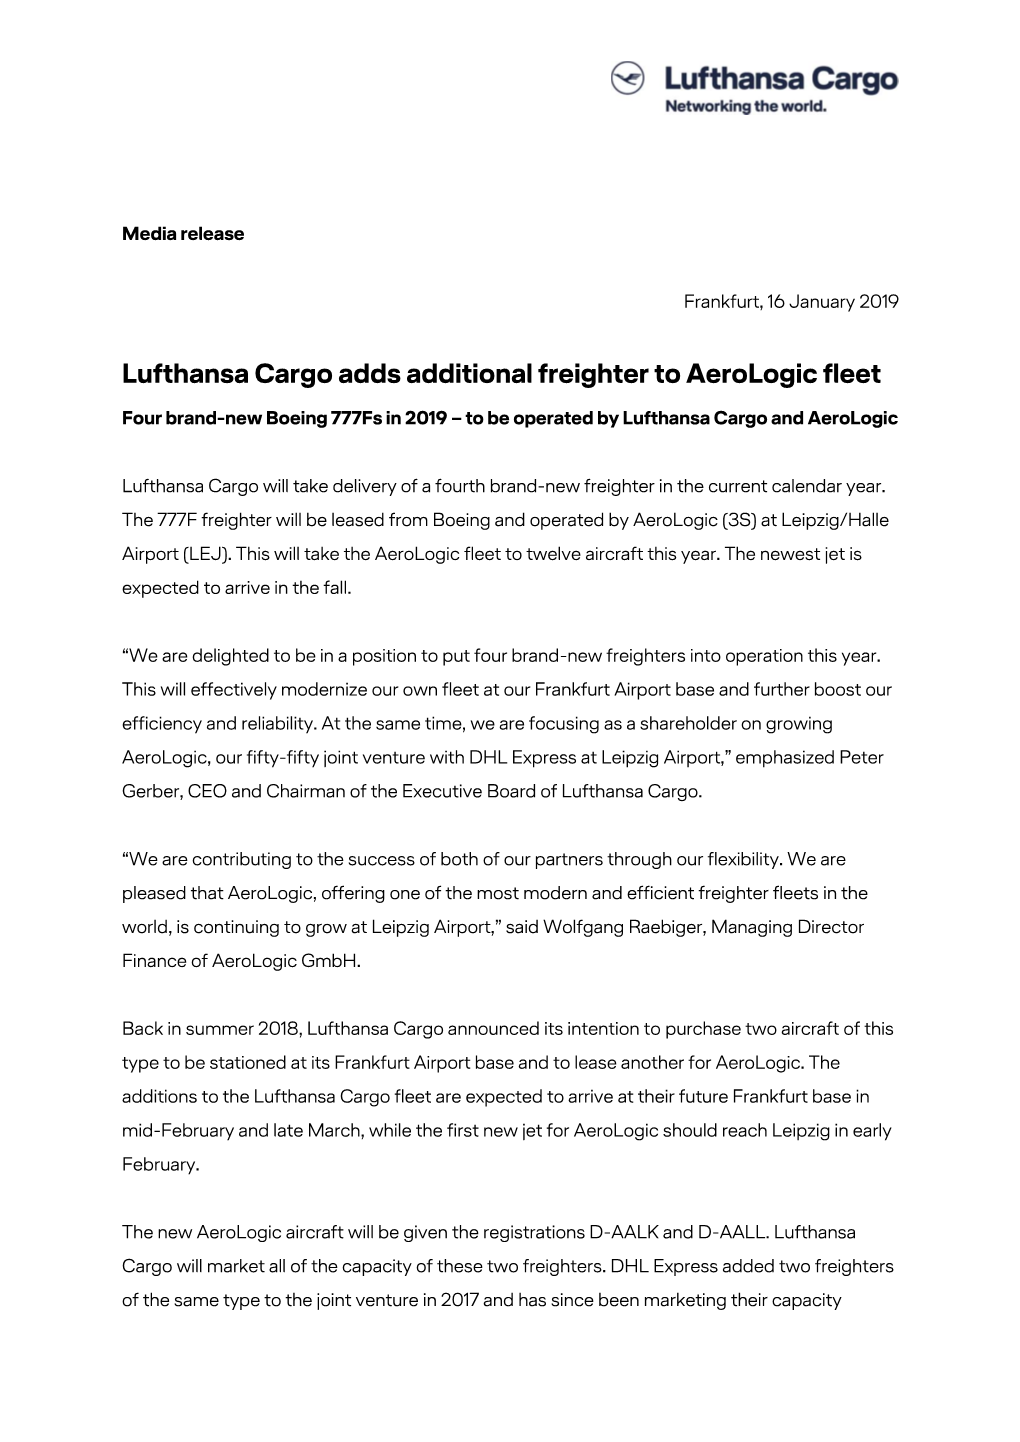 Lufthansa Cargo Adds Additional Freighter to Aerologic Fleet